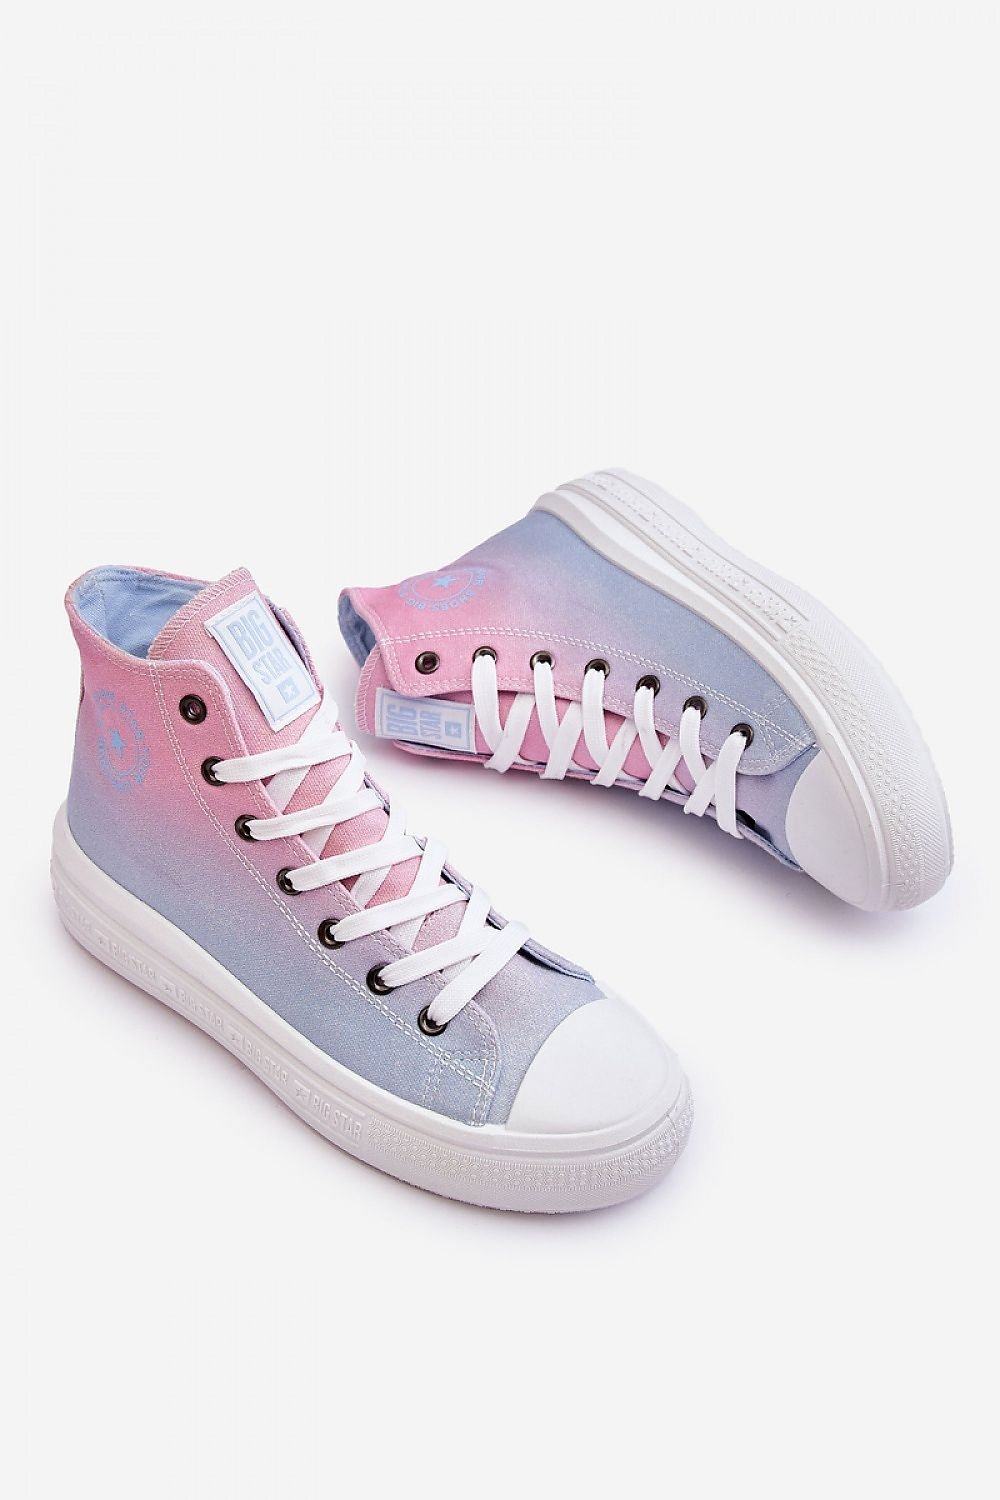 High Top Ombre Platform Sneakers - Blue Pink